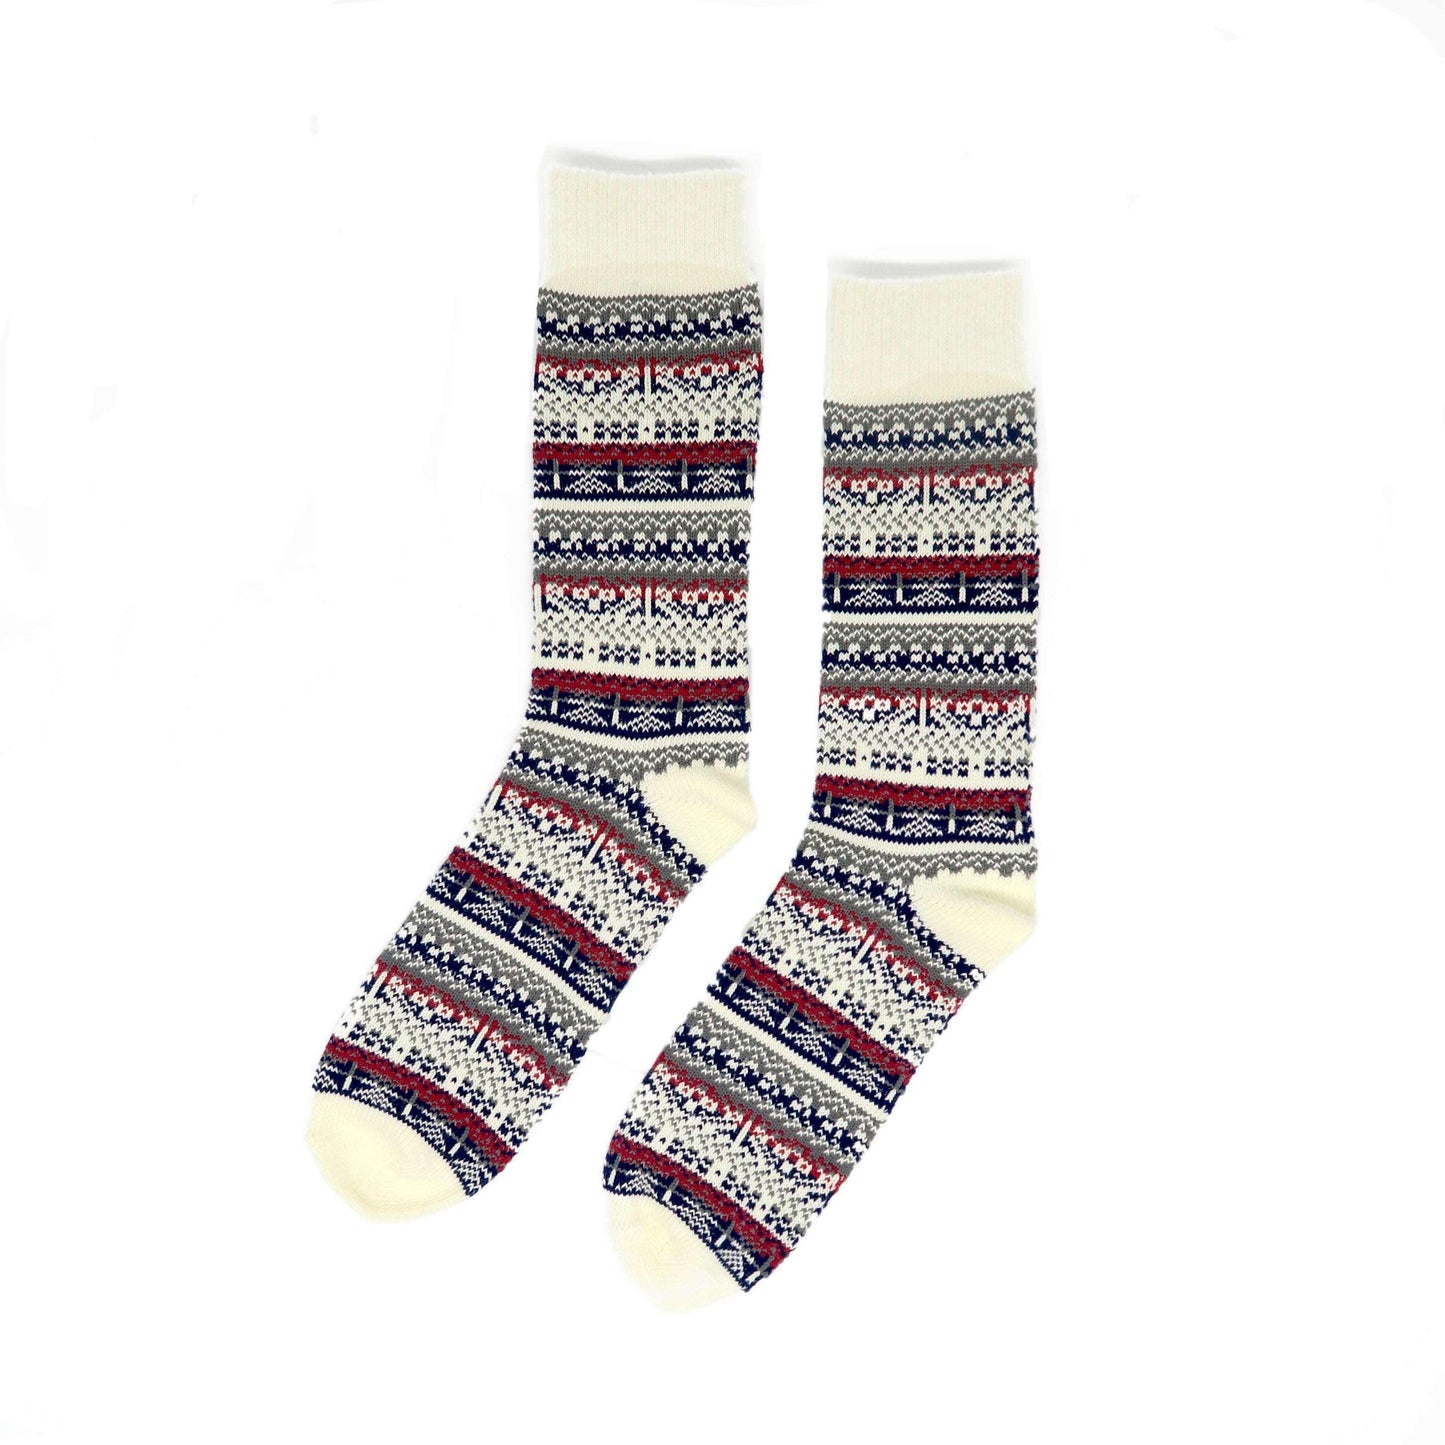 Helsinki sock - white, grey and red trial pattern sock